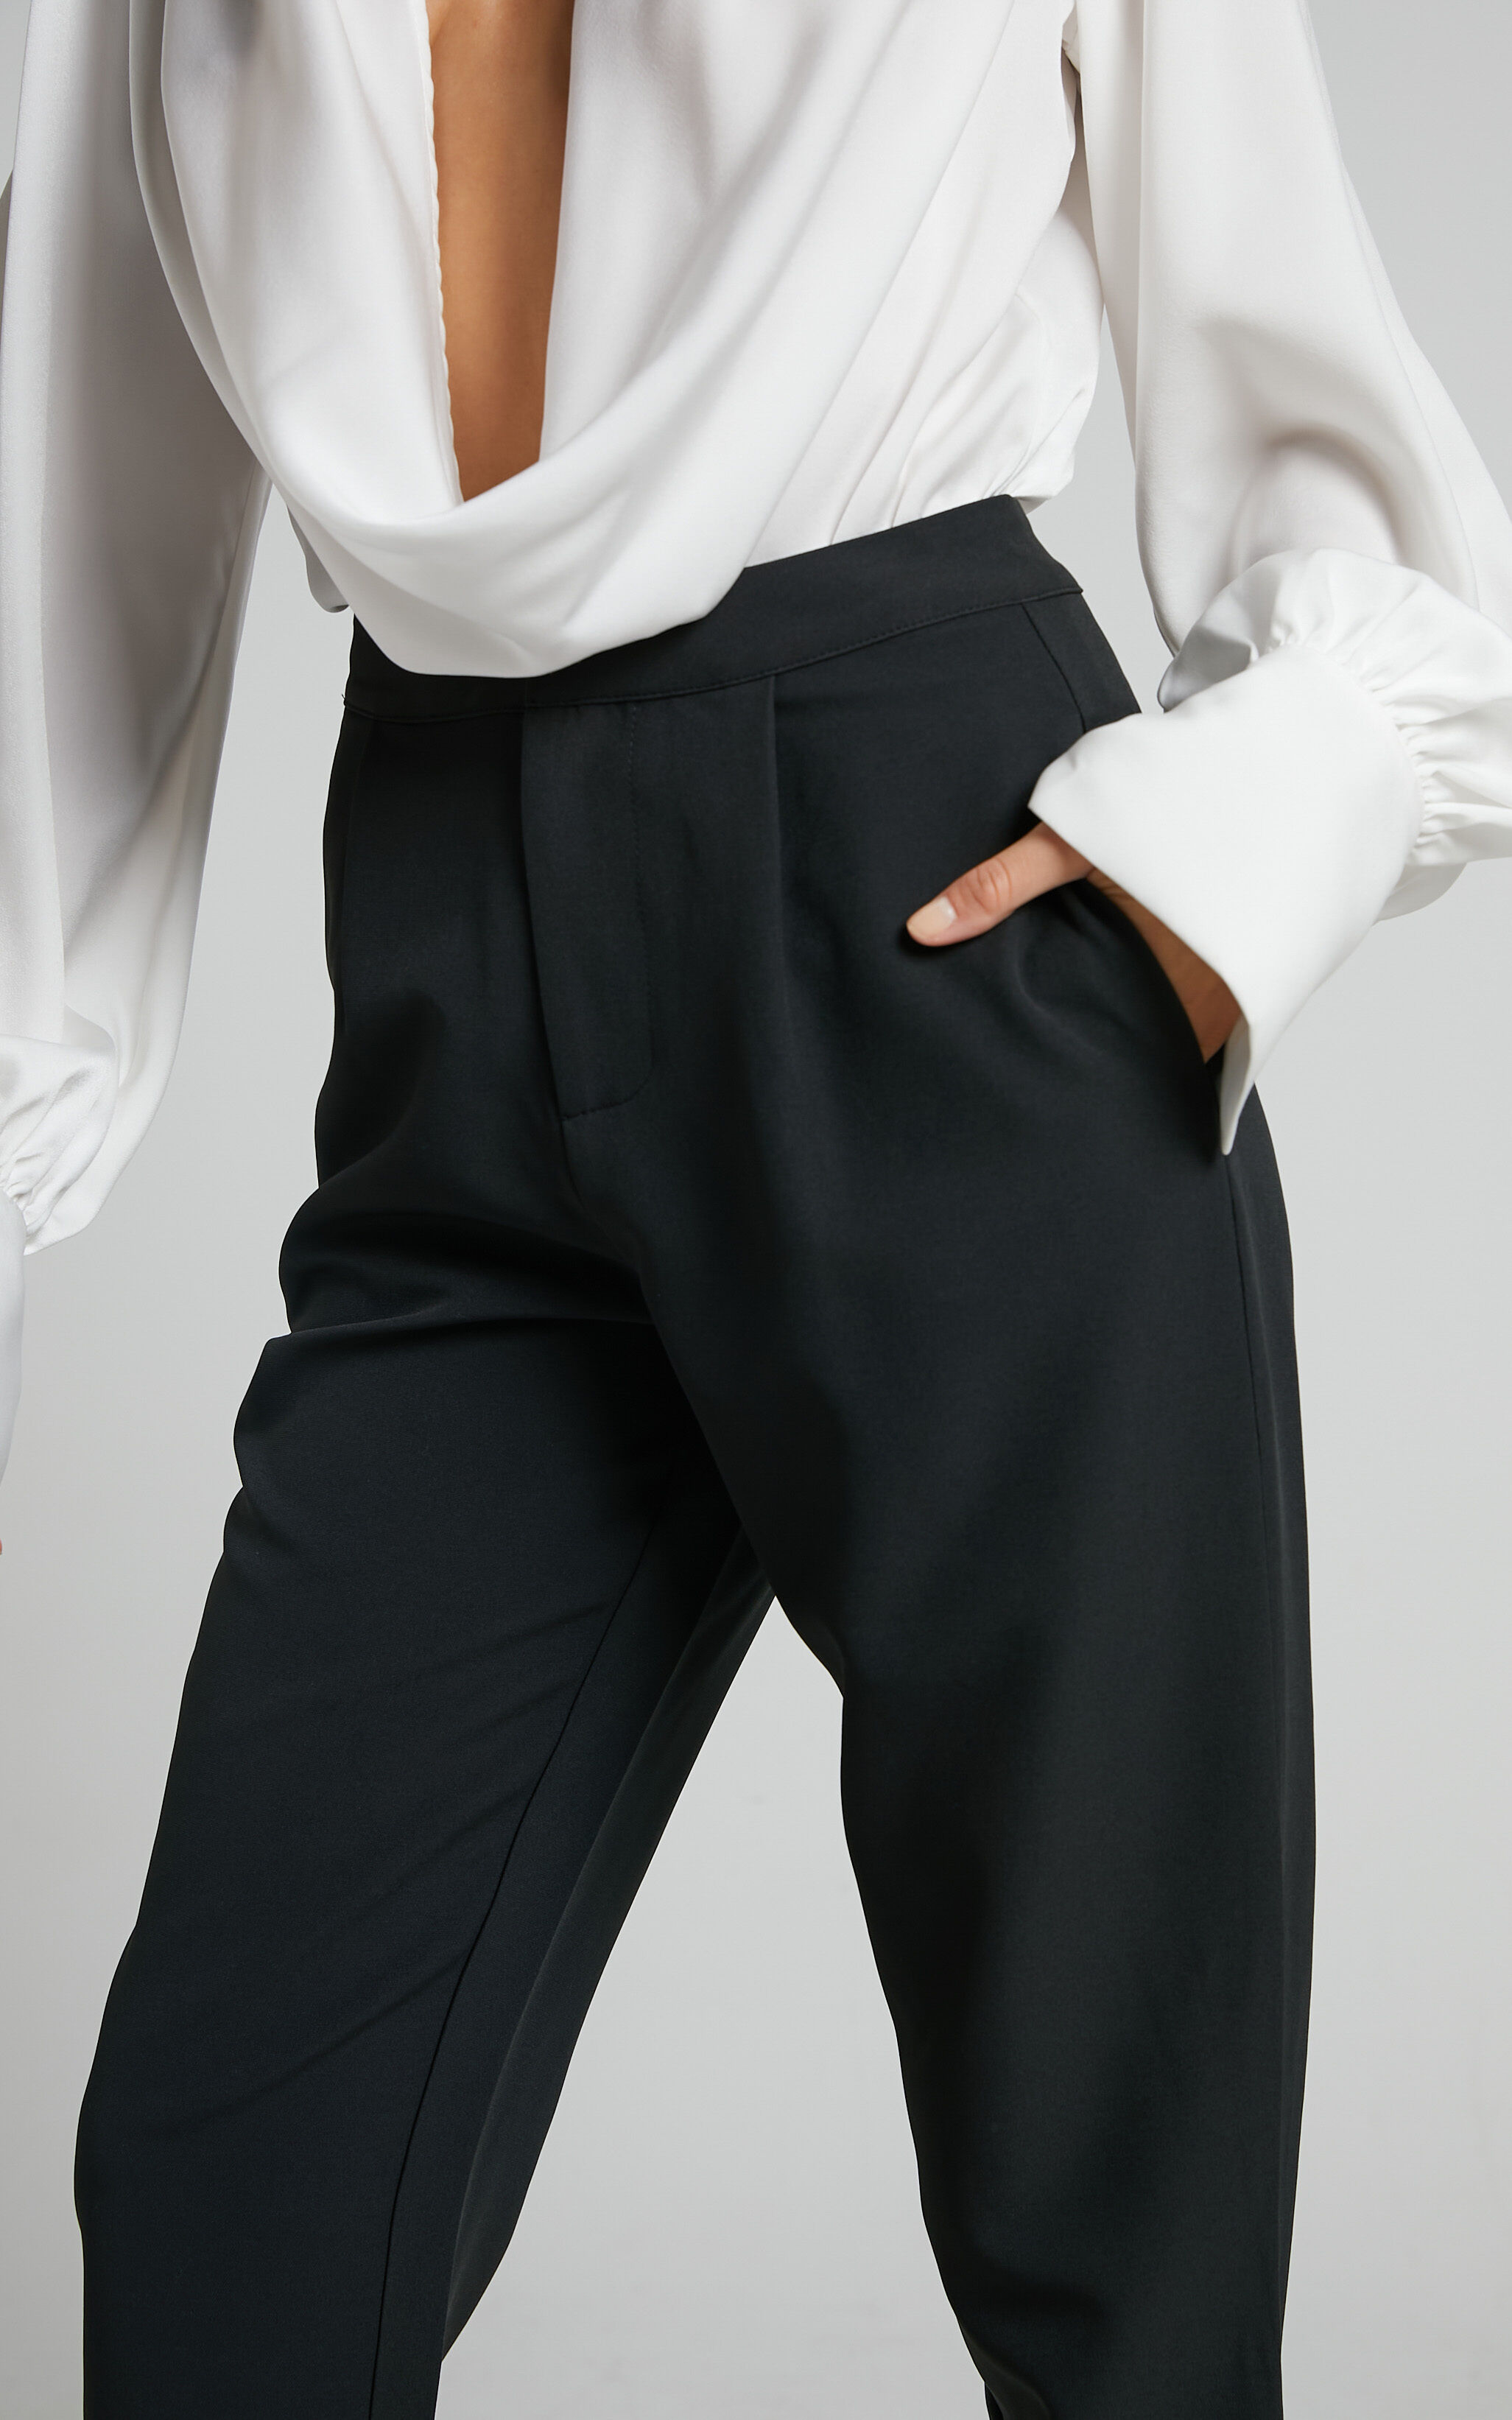 Damika Pants - High Waist Cropped Pin Tuck Pants in Black | Showpo USA